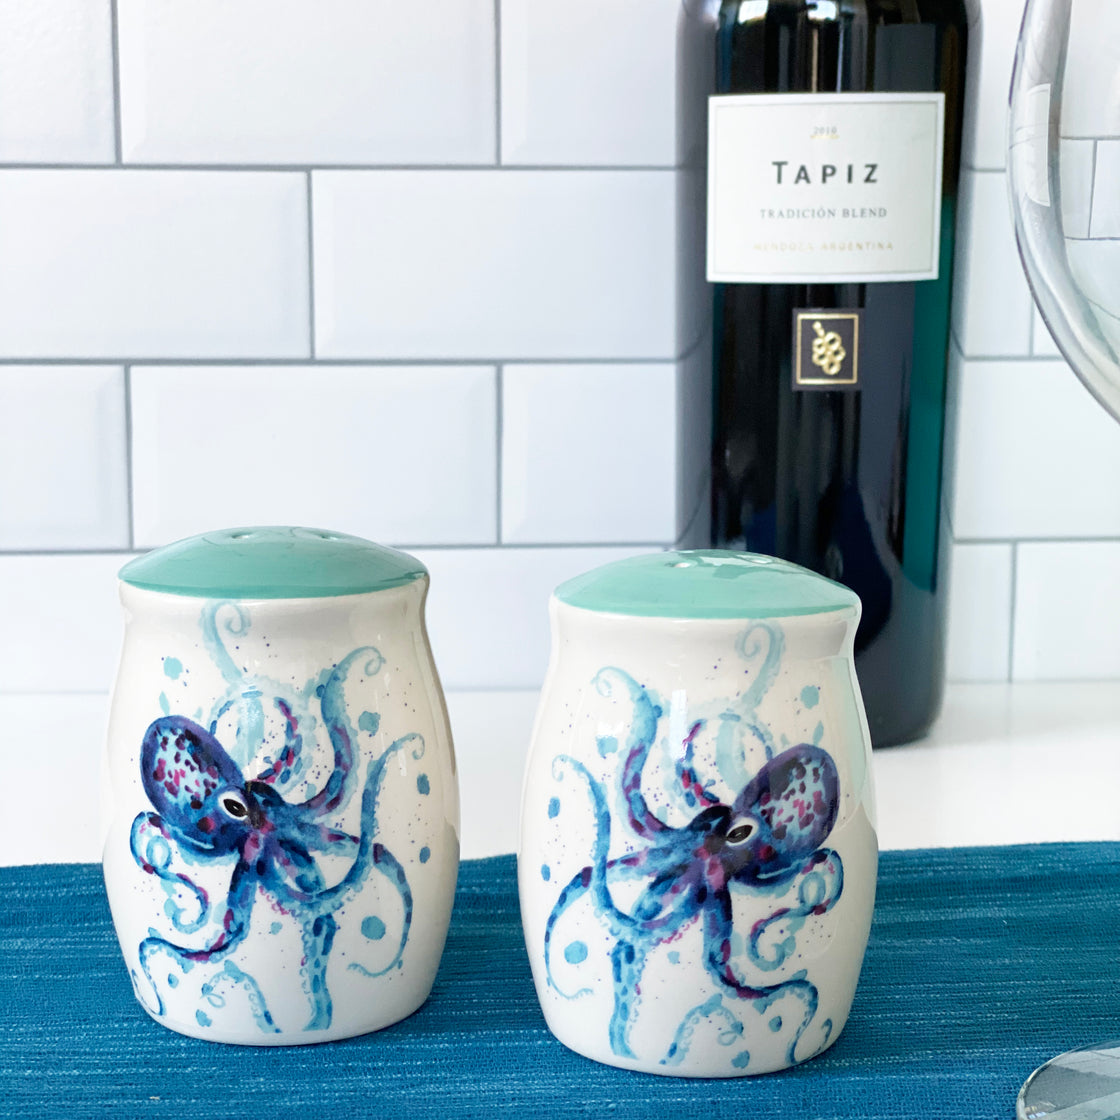 octopus salt n pepper shakers on blue runner with wine bottle in background